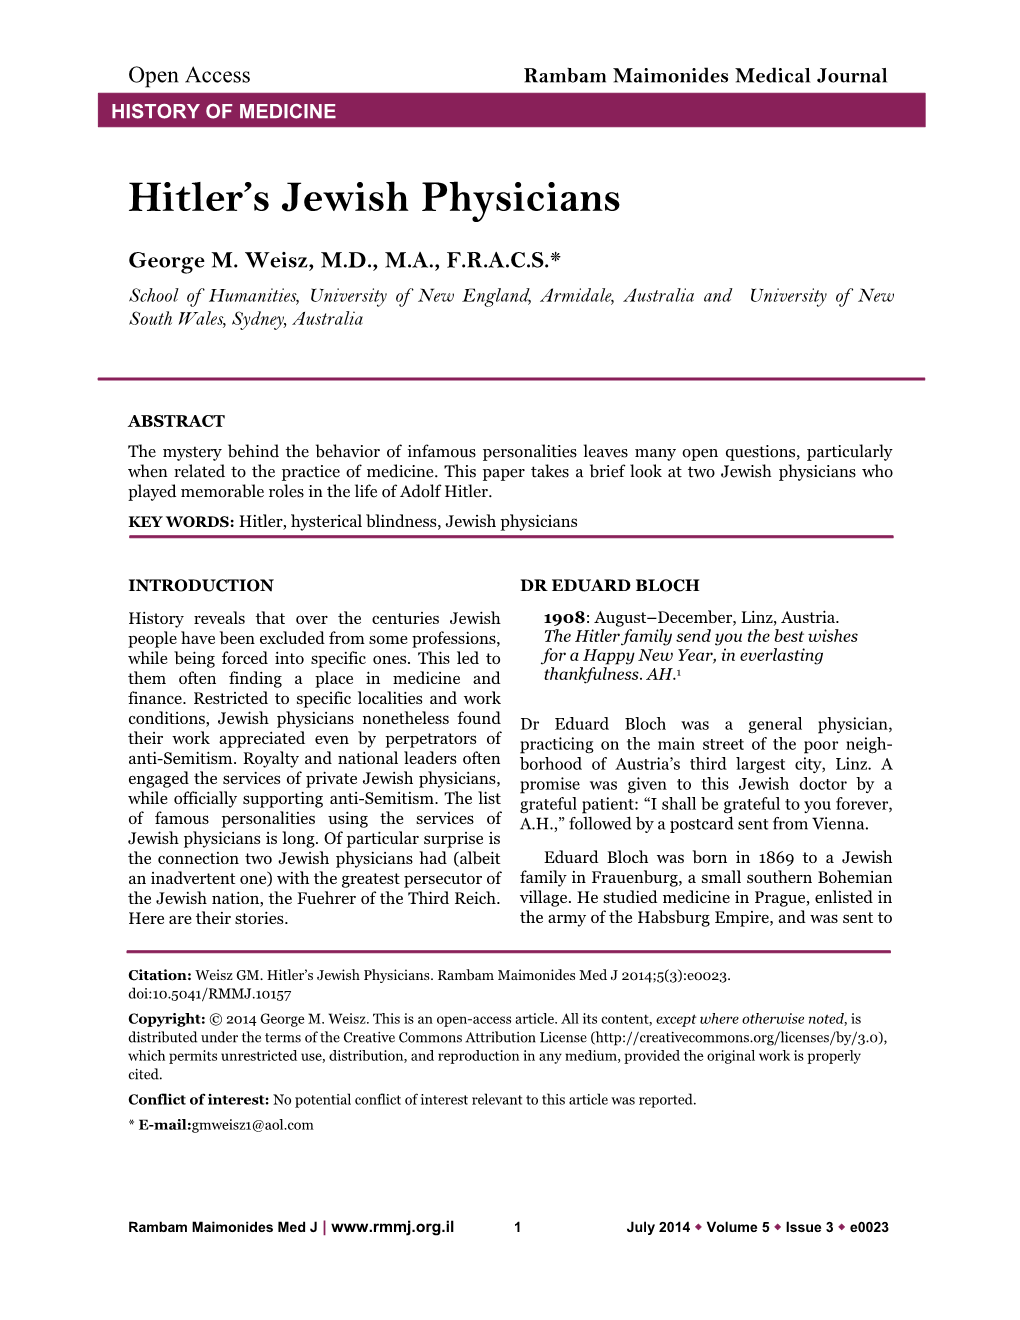 Hitler's Jewish Physicians